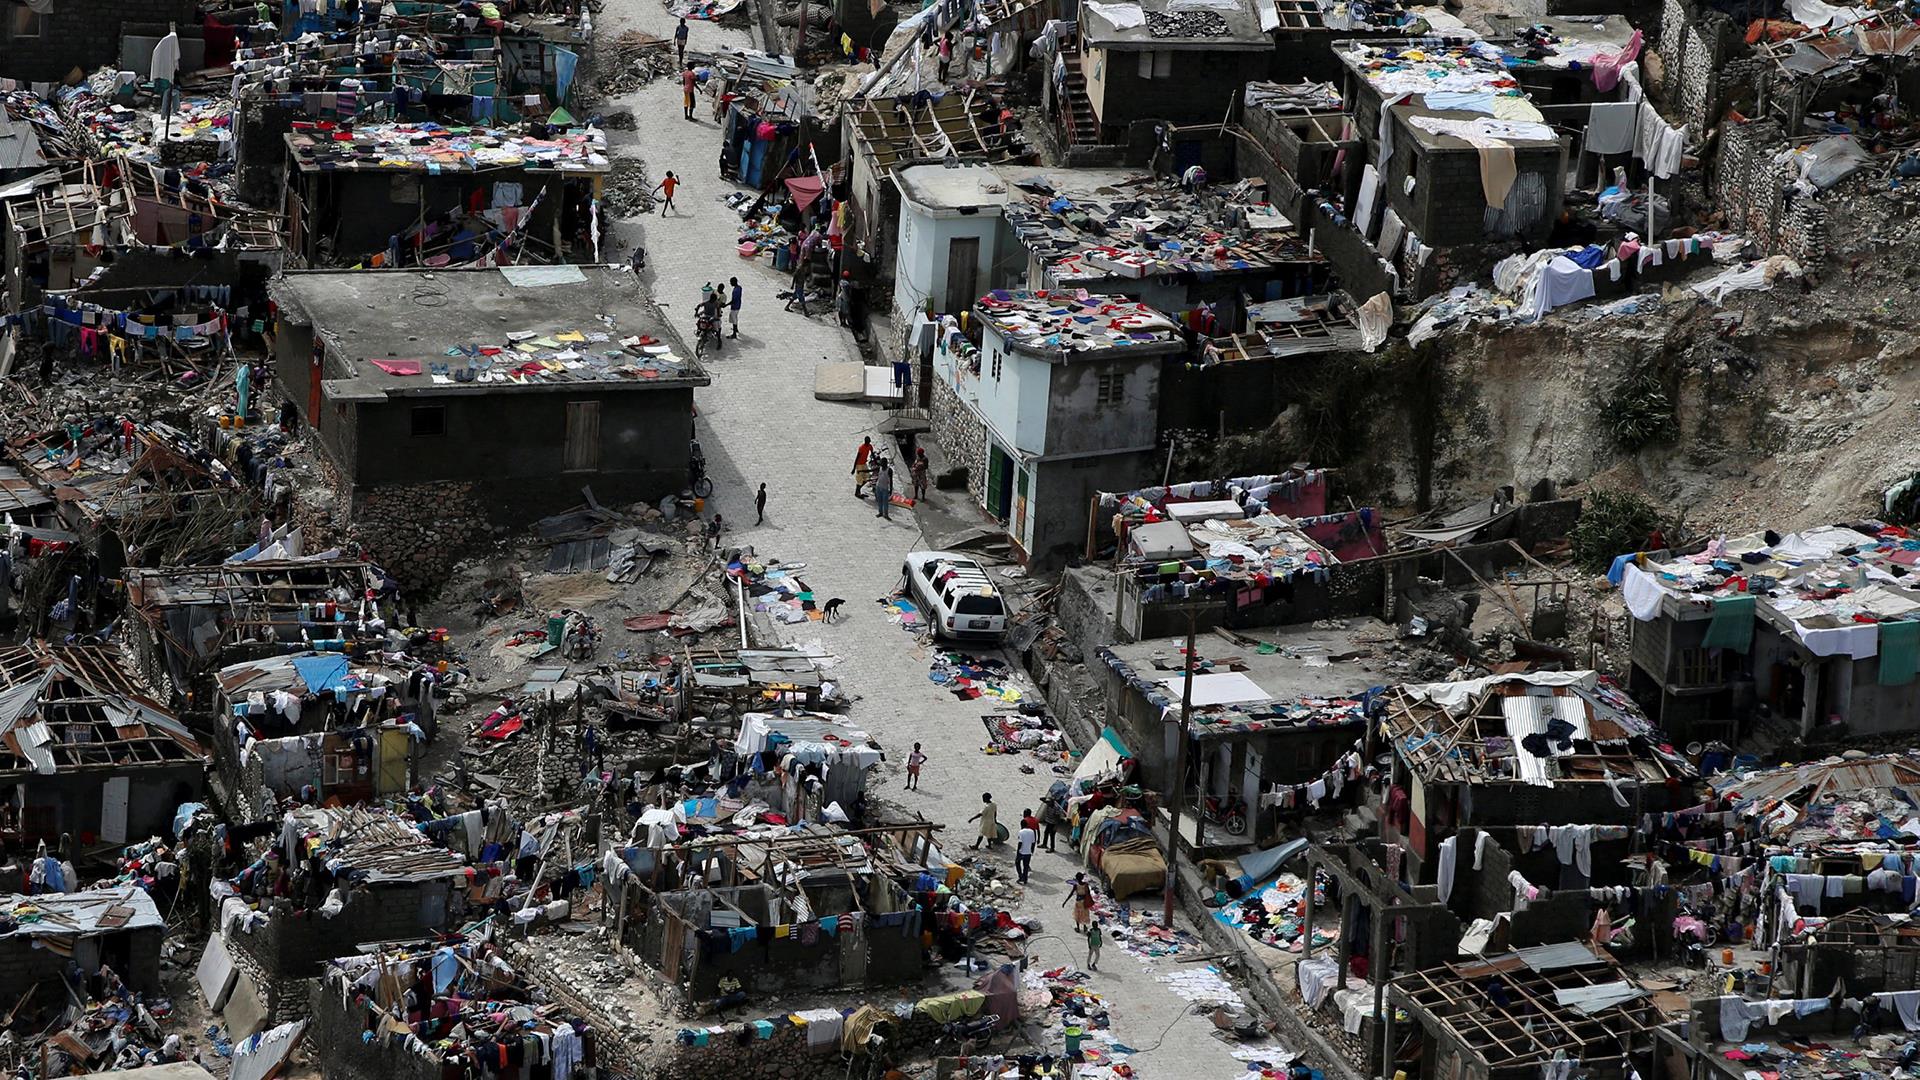 A bird's eye view of a slum in Haiti